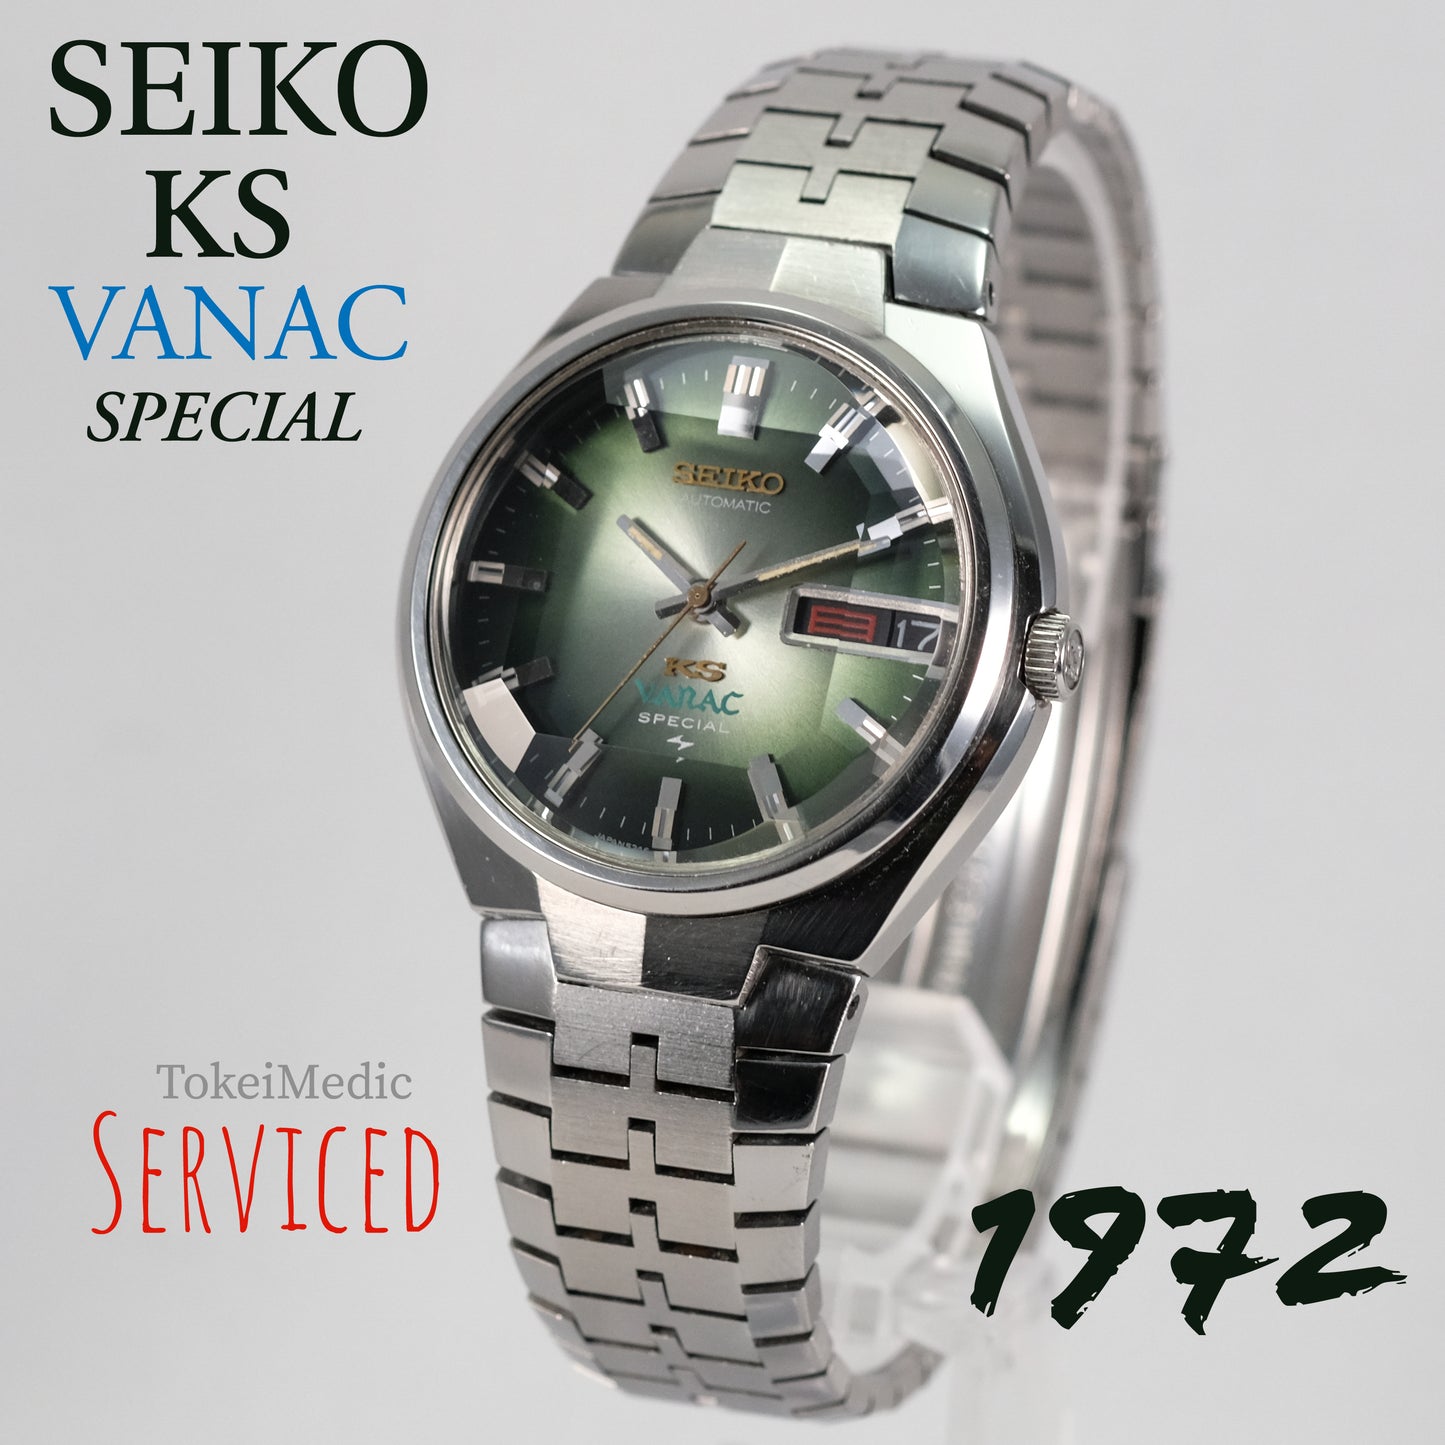 1972 Seiko KS Vanac Special 5246-6050